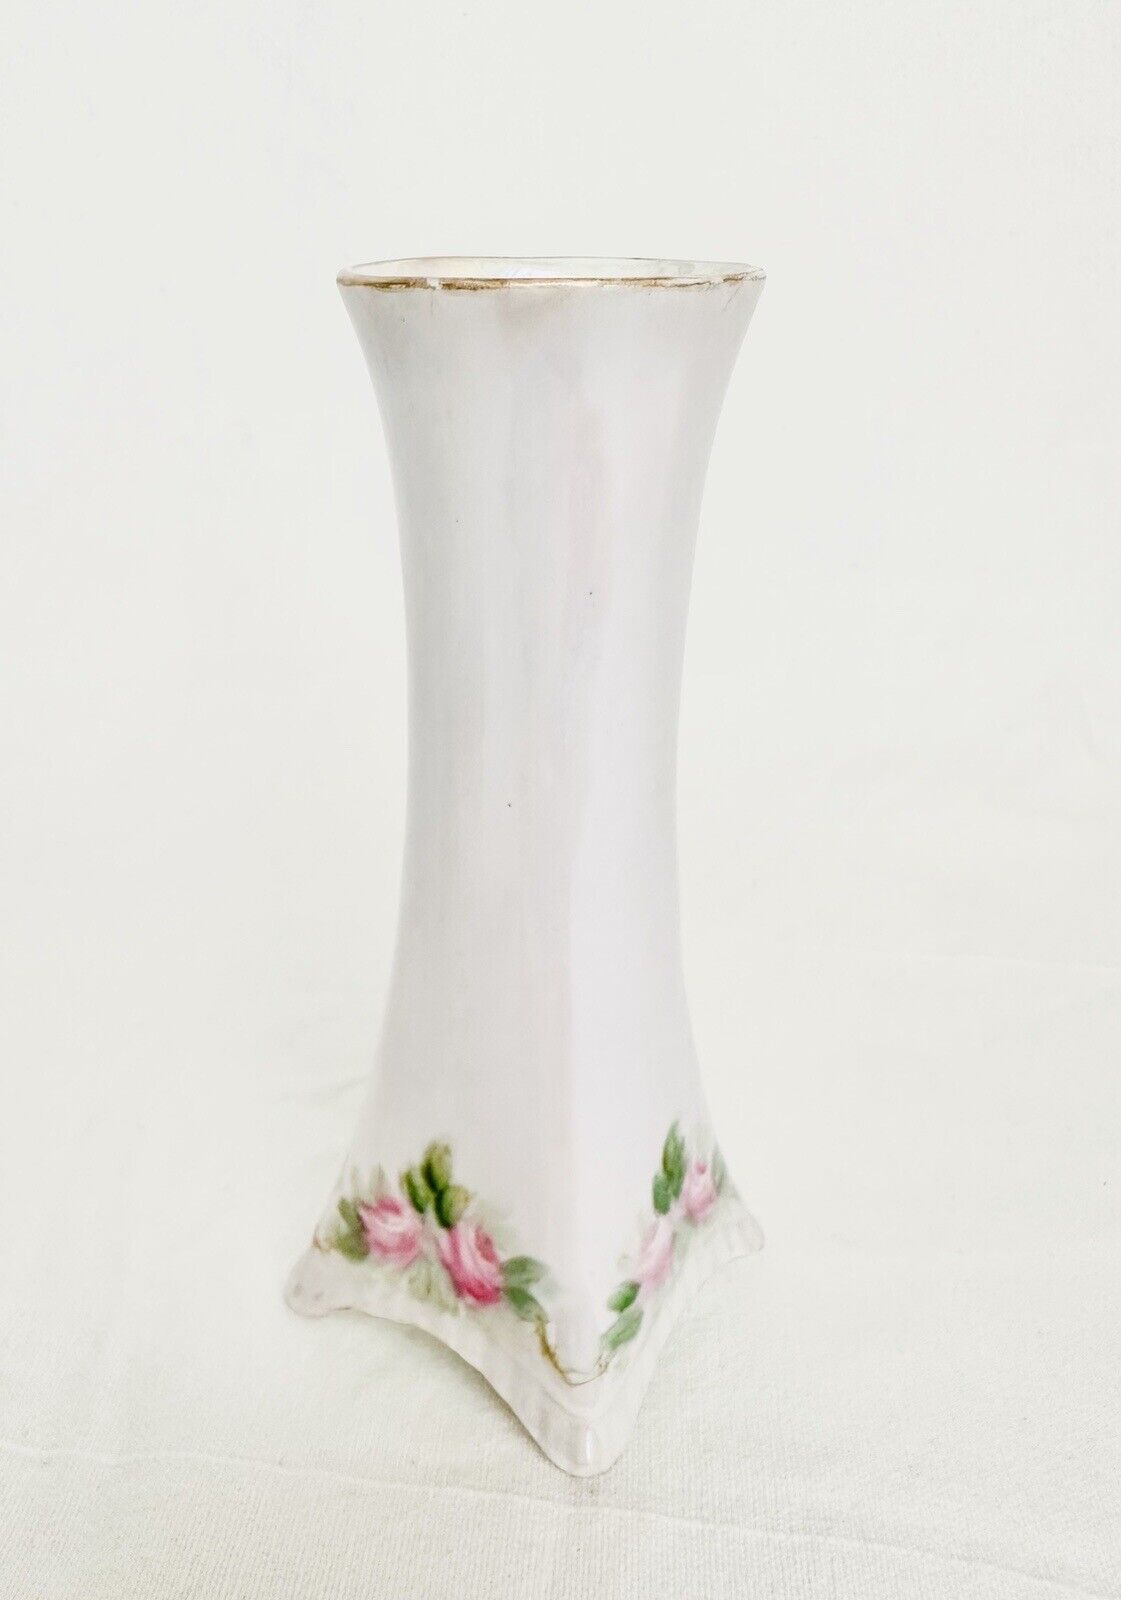 BAVARIA #2431 Hand Painted Porcelain Roses Vase